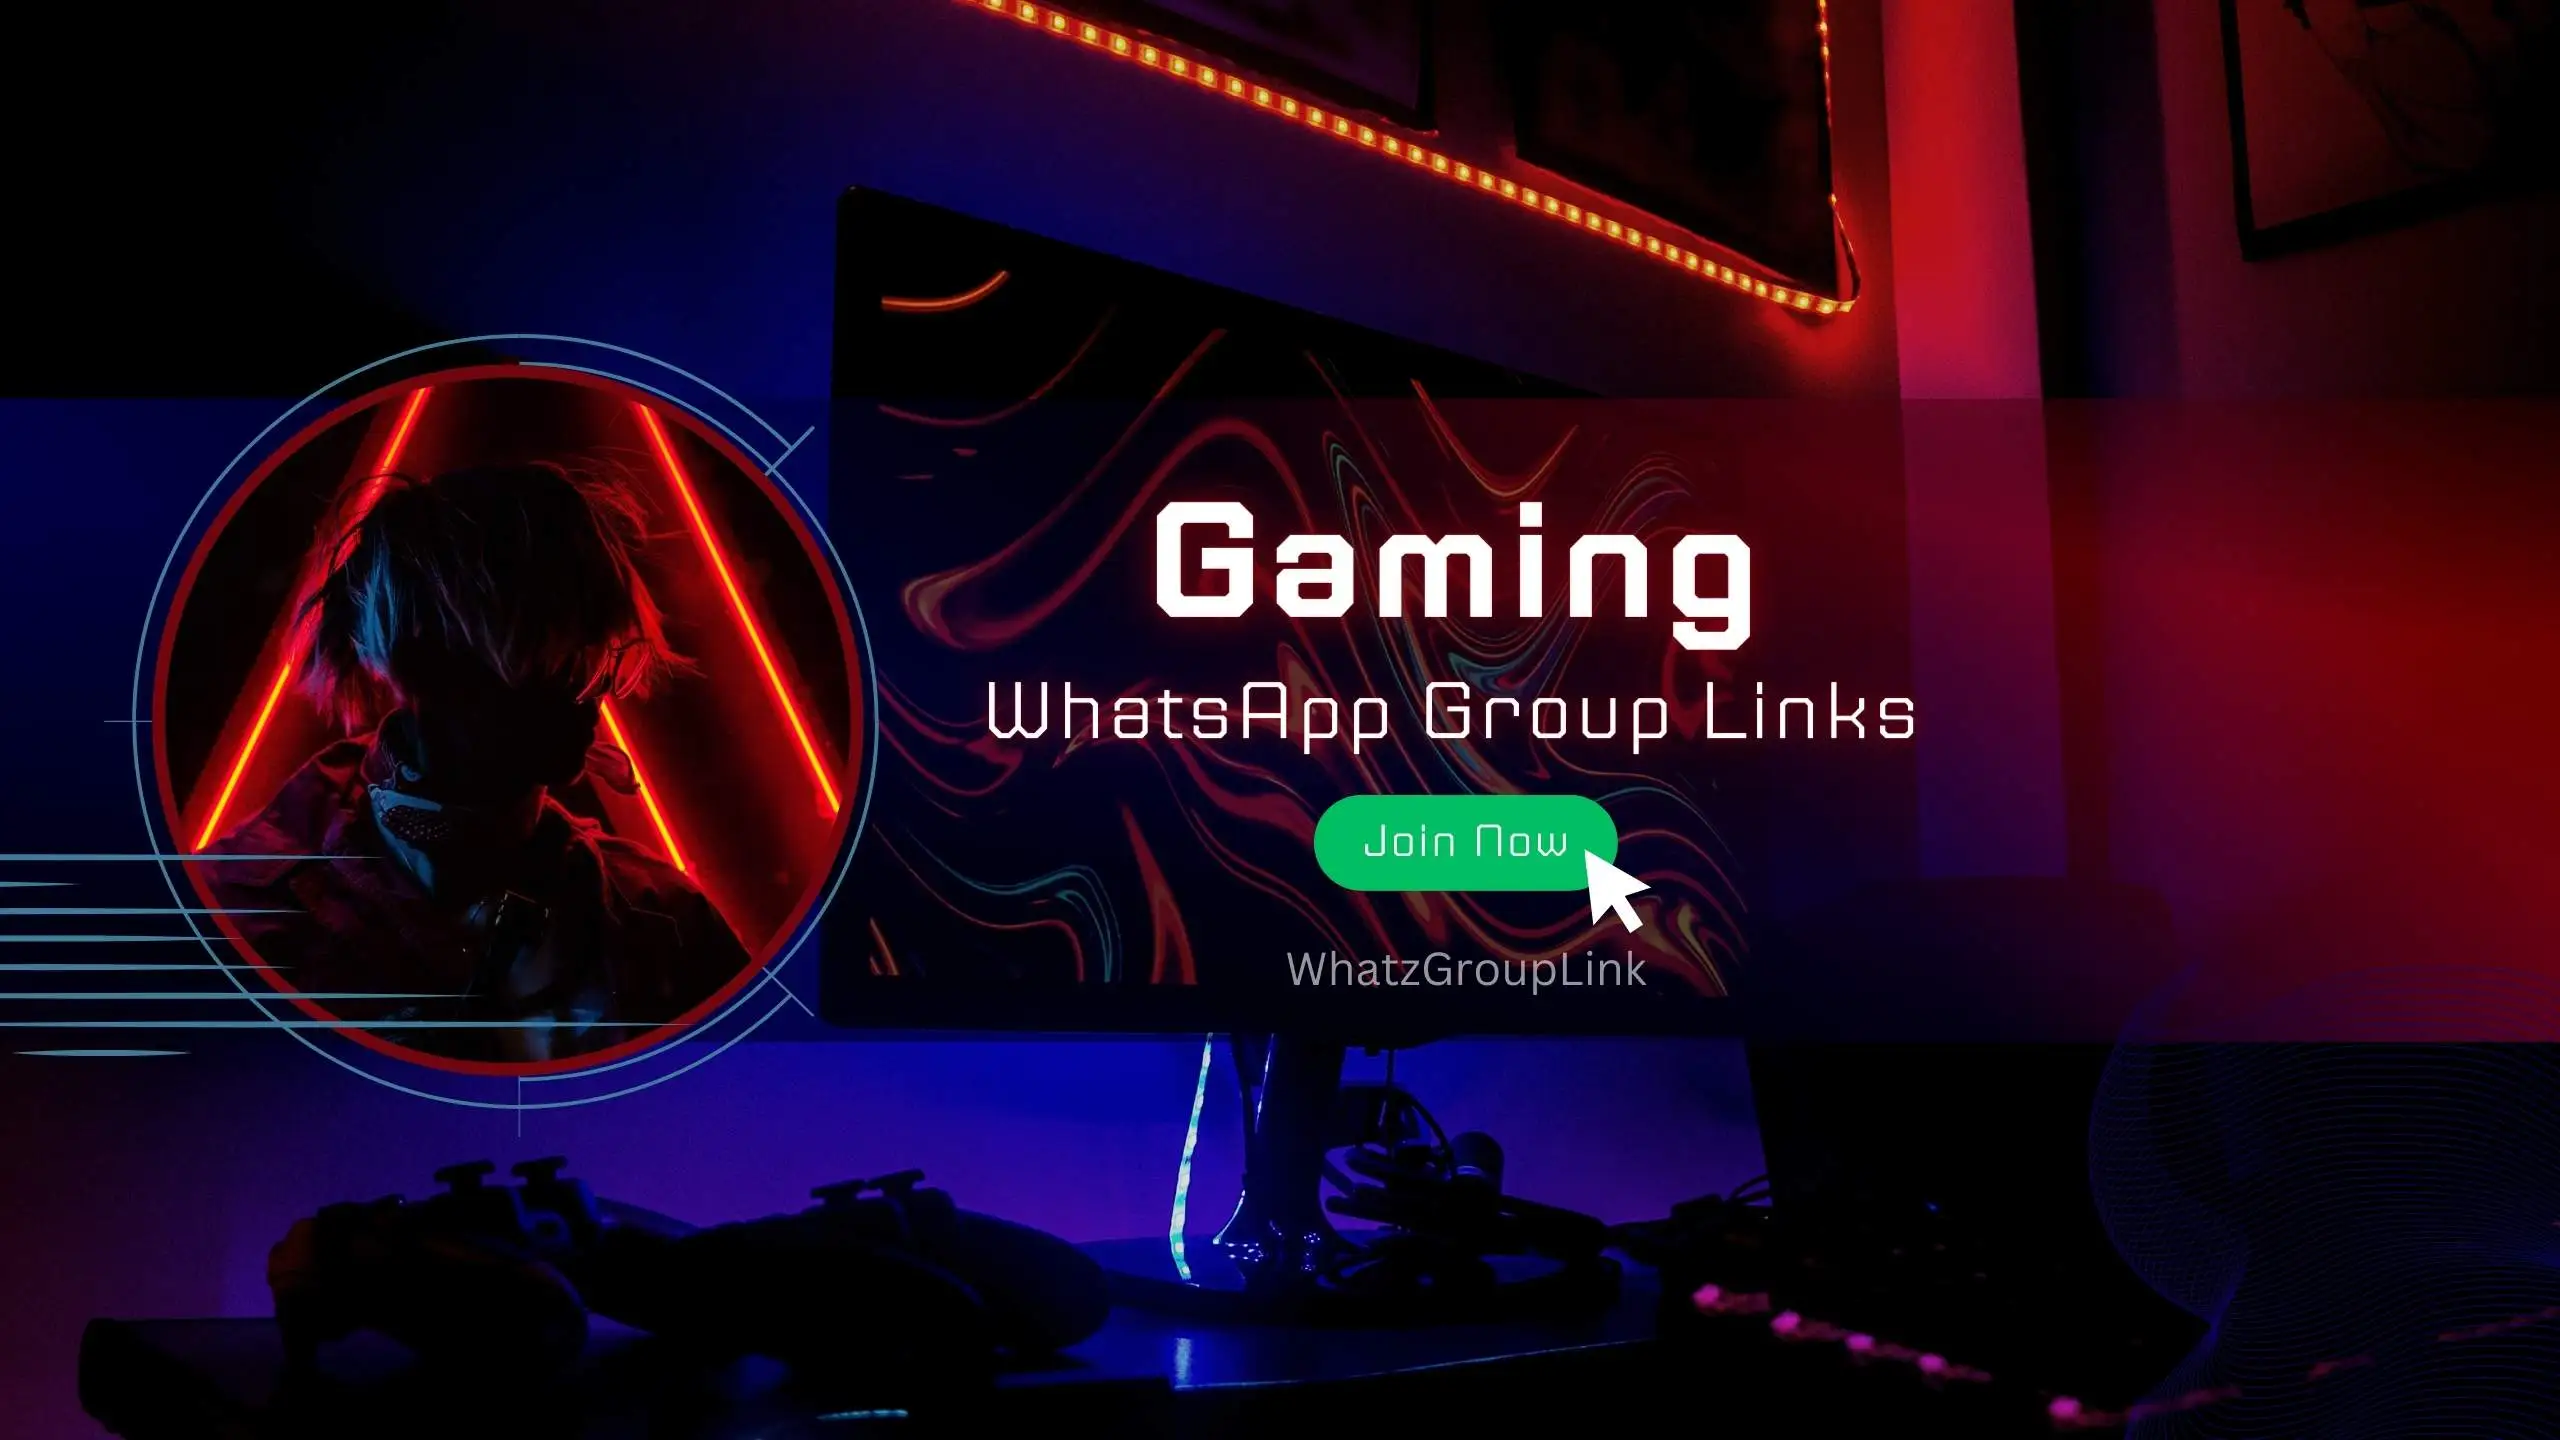 Gaming WhatsApp Group Links